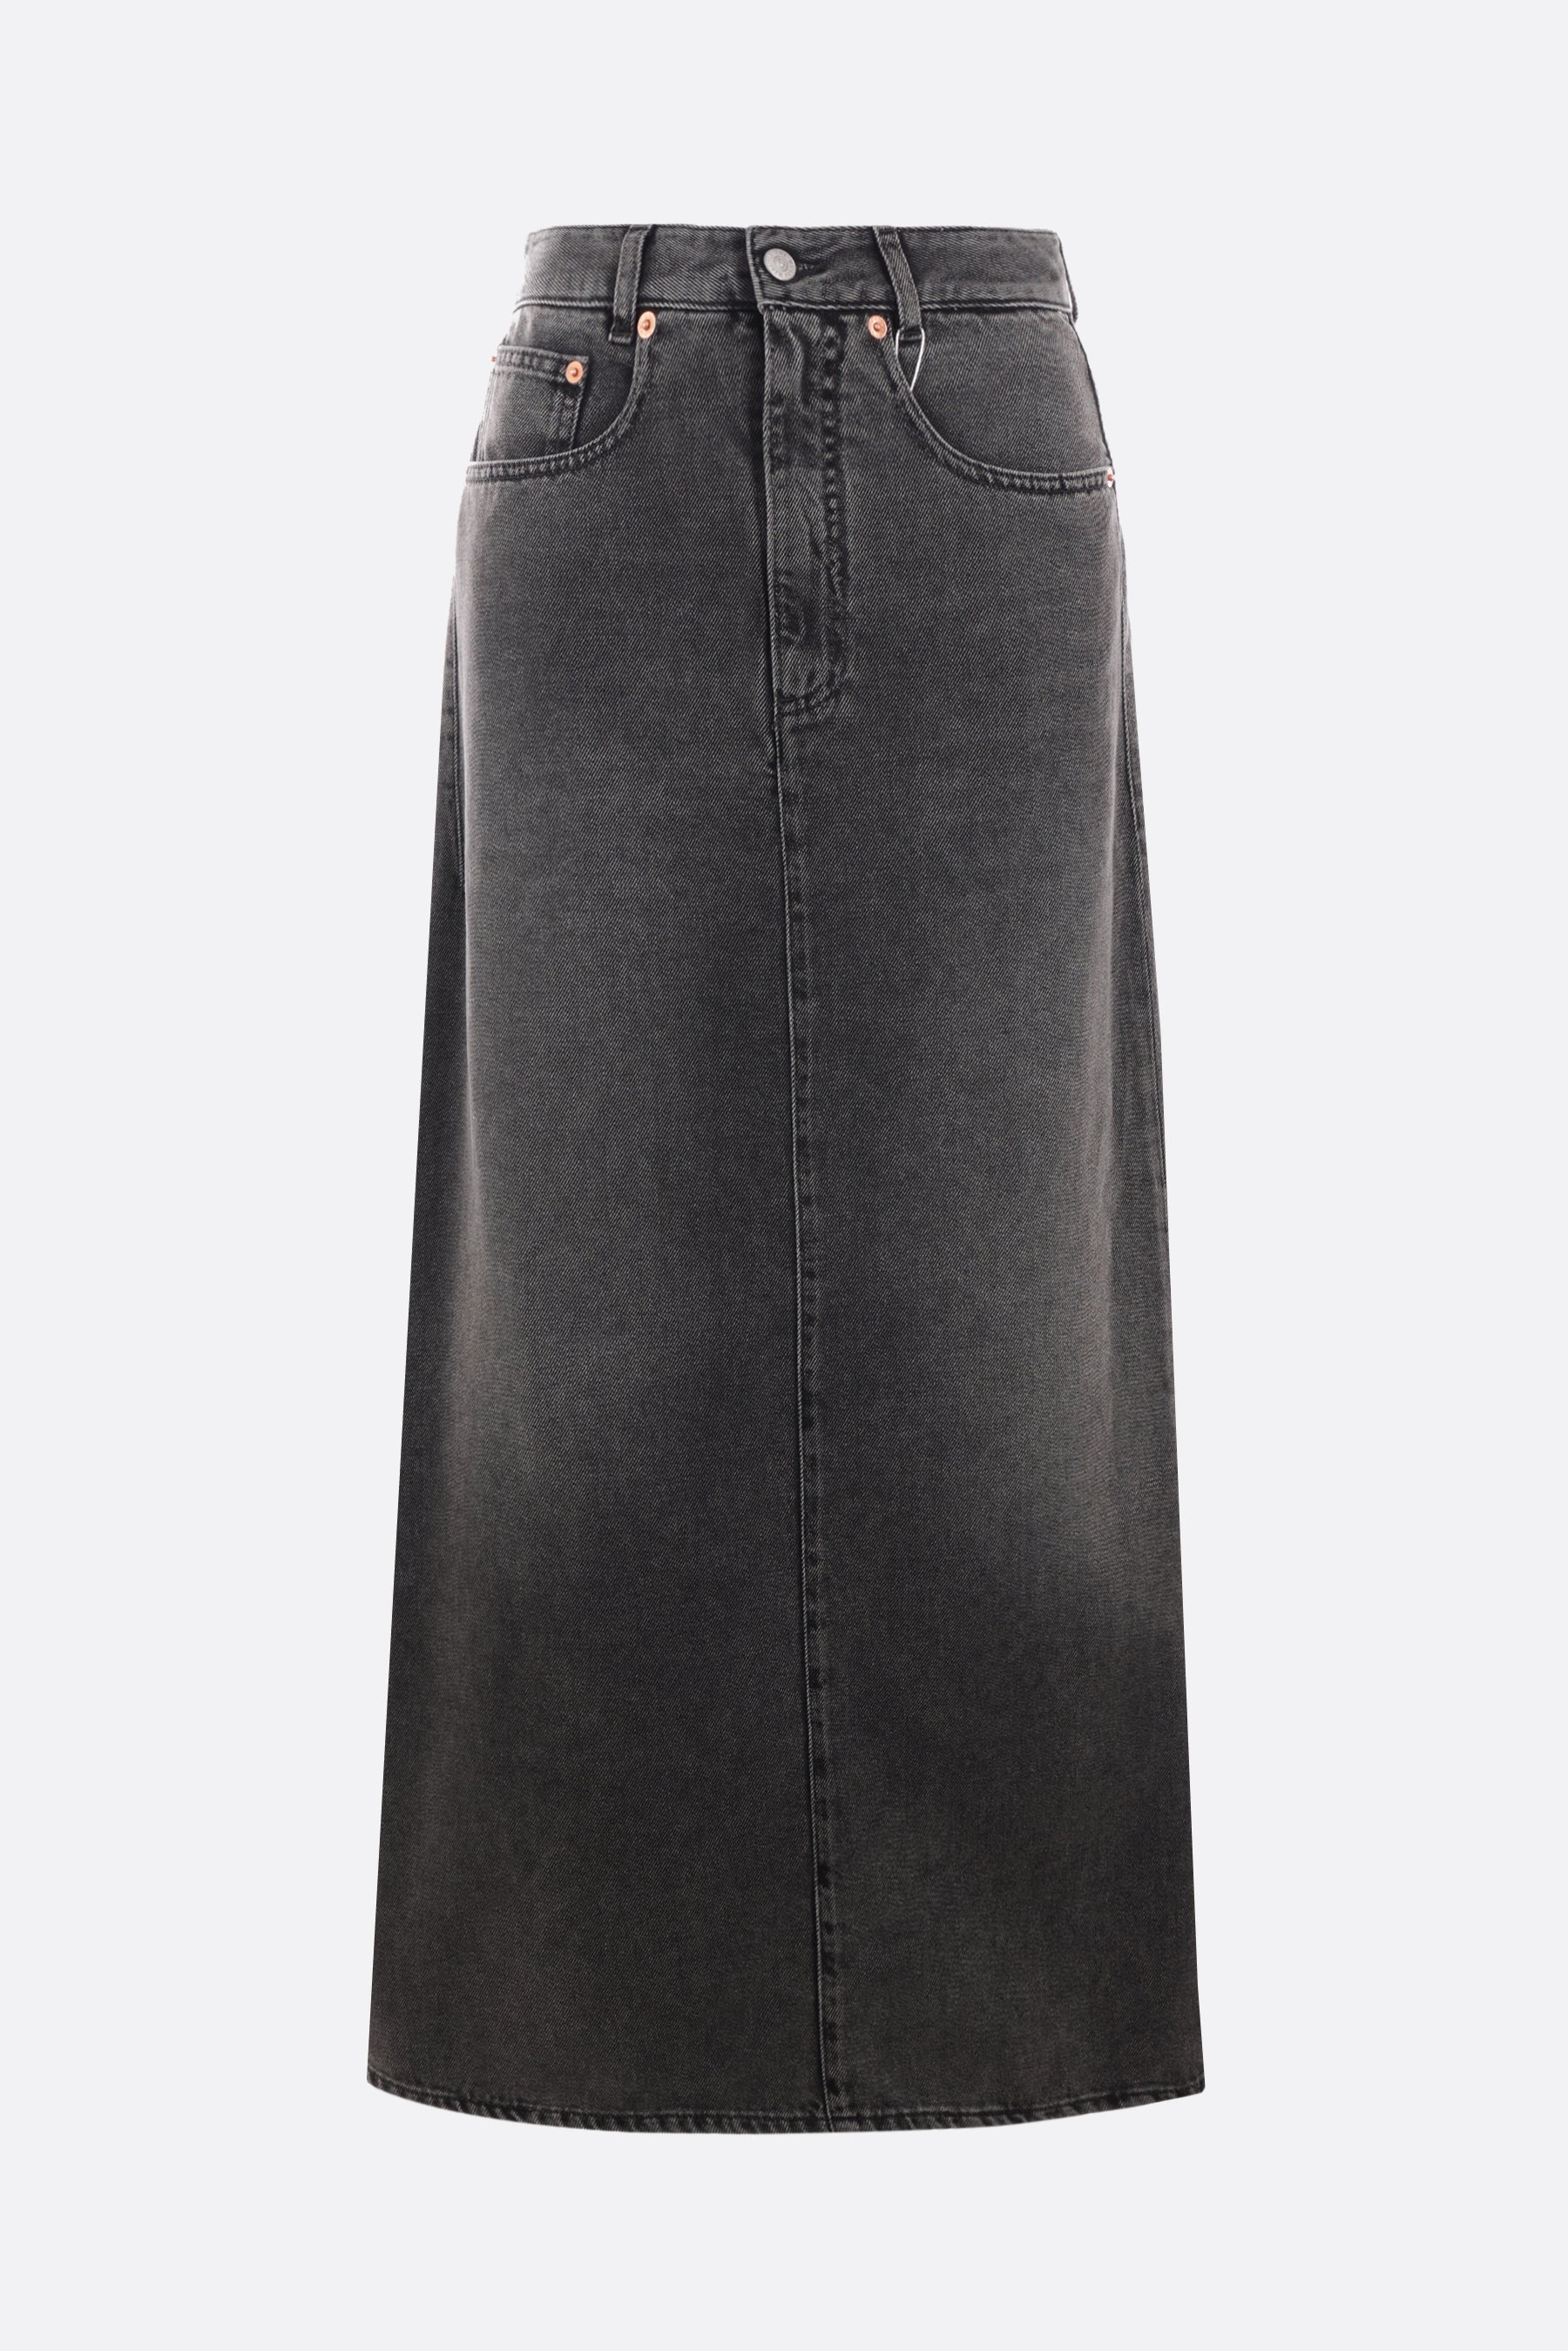 denim long skirt with side panel